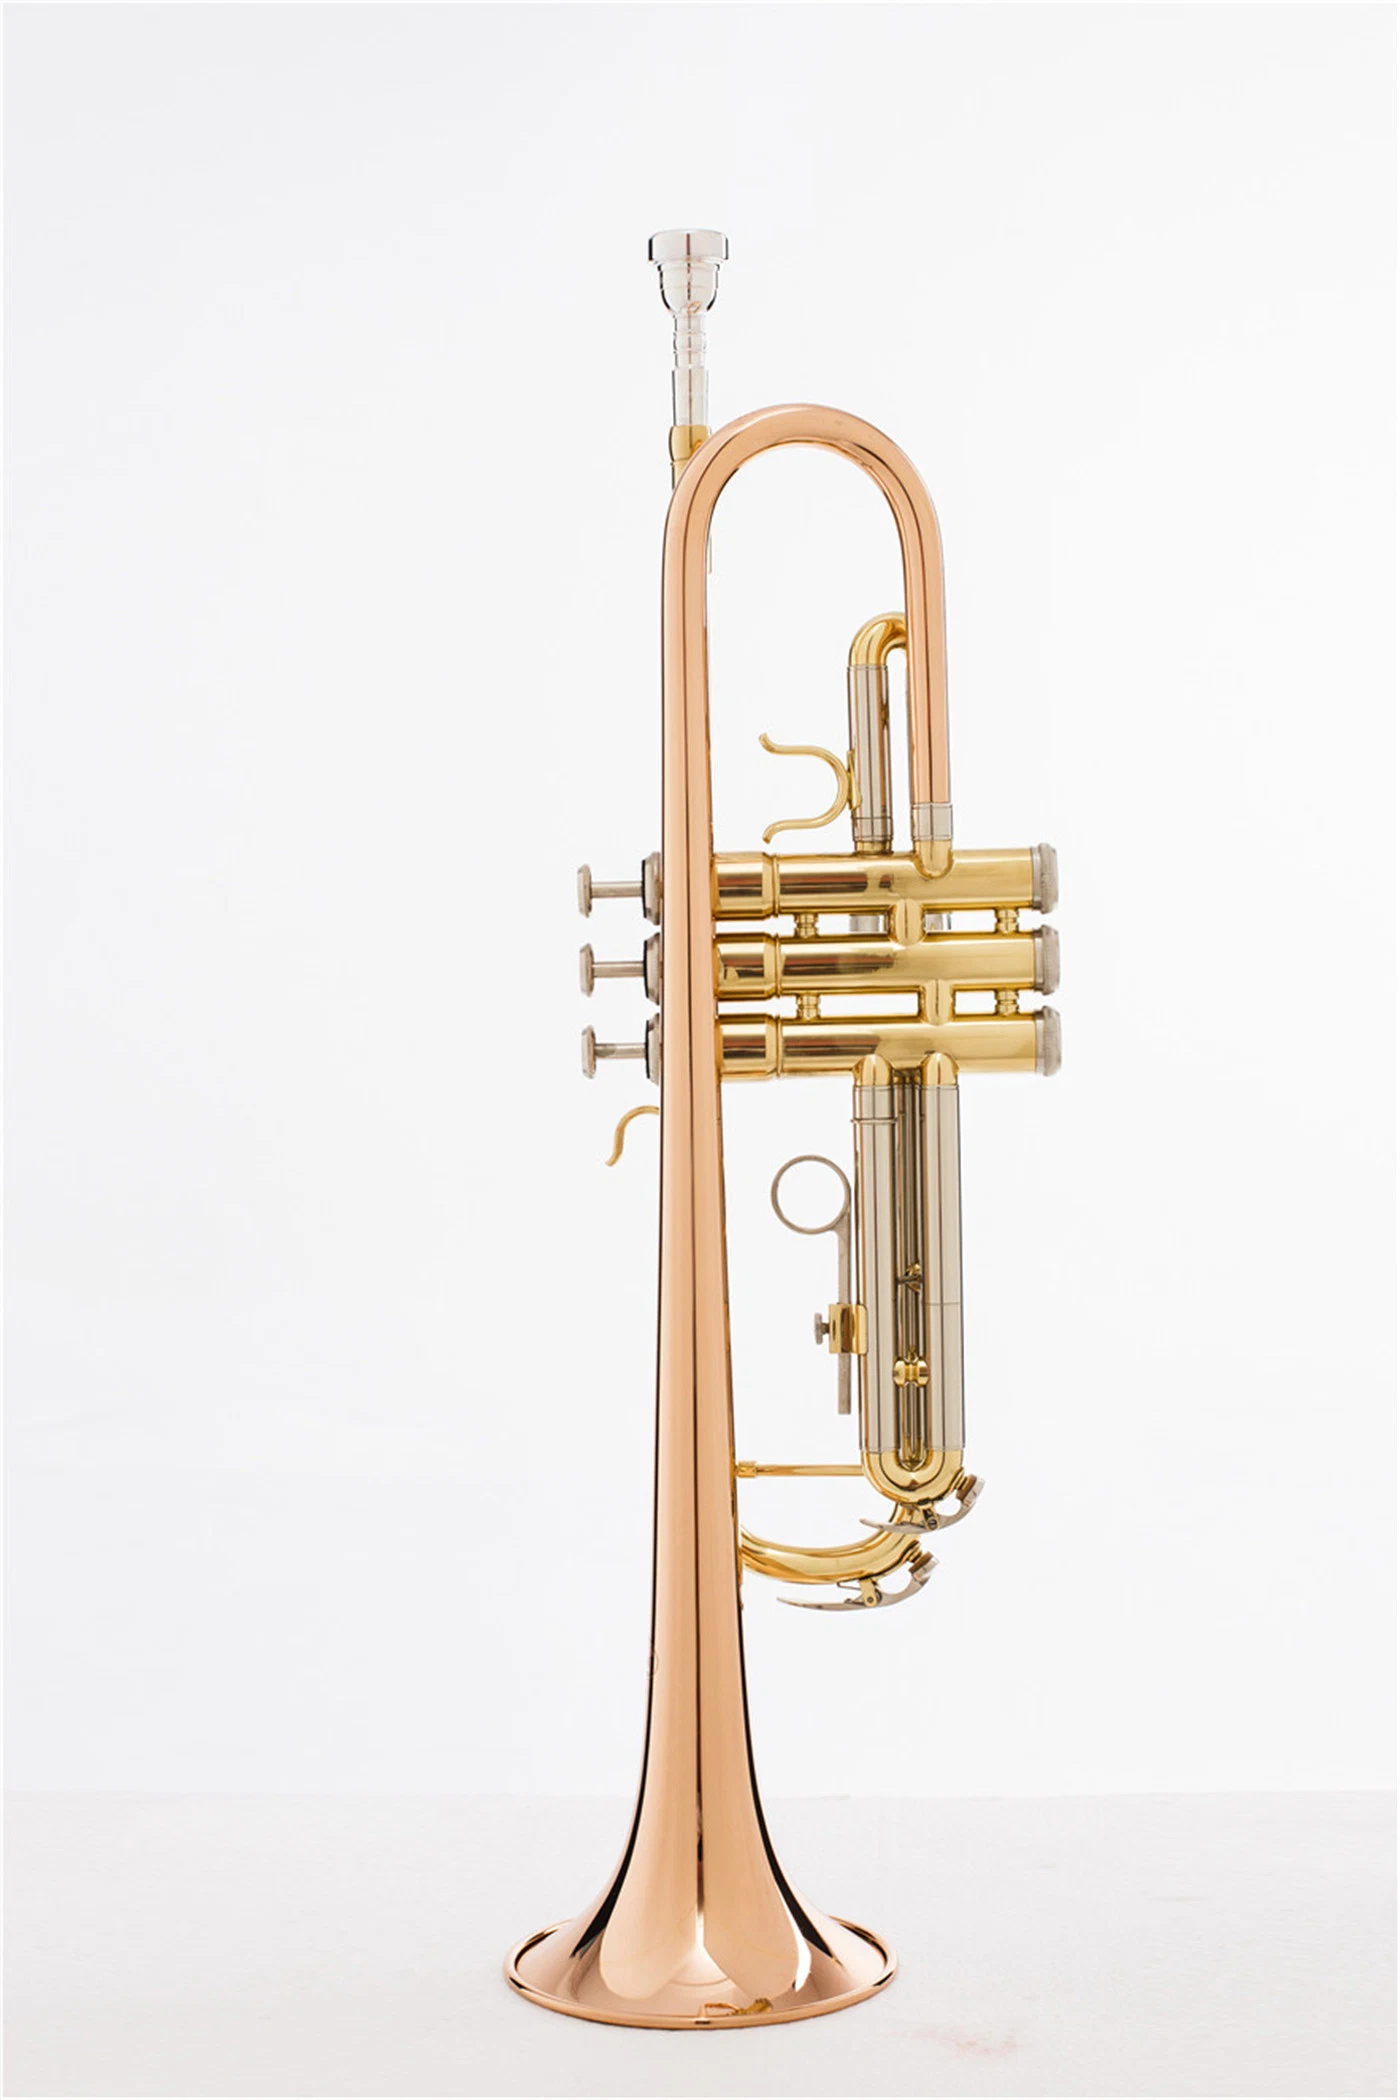 High Grade Trumpet /Phosphor Copper Material /Wholesale/Supplier Price